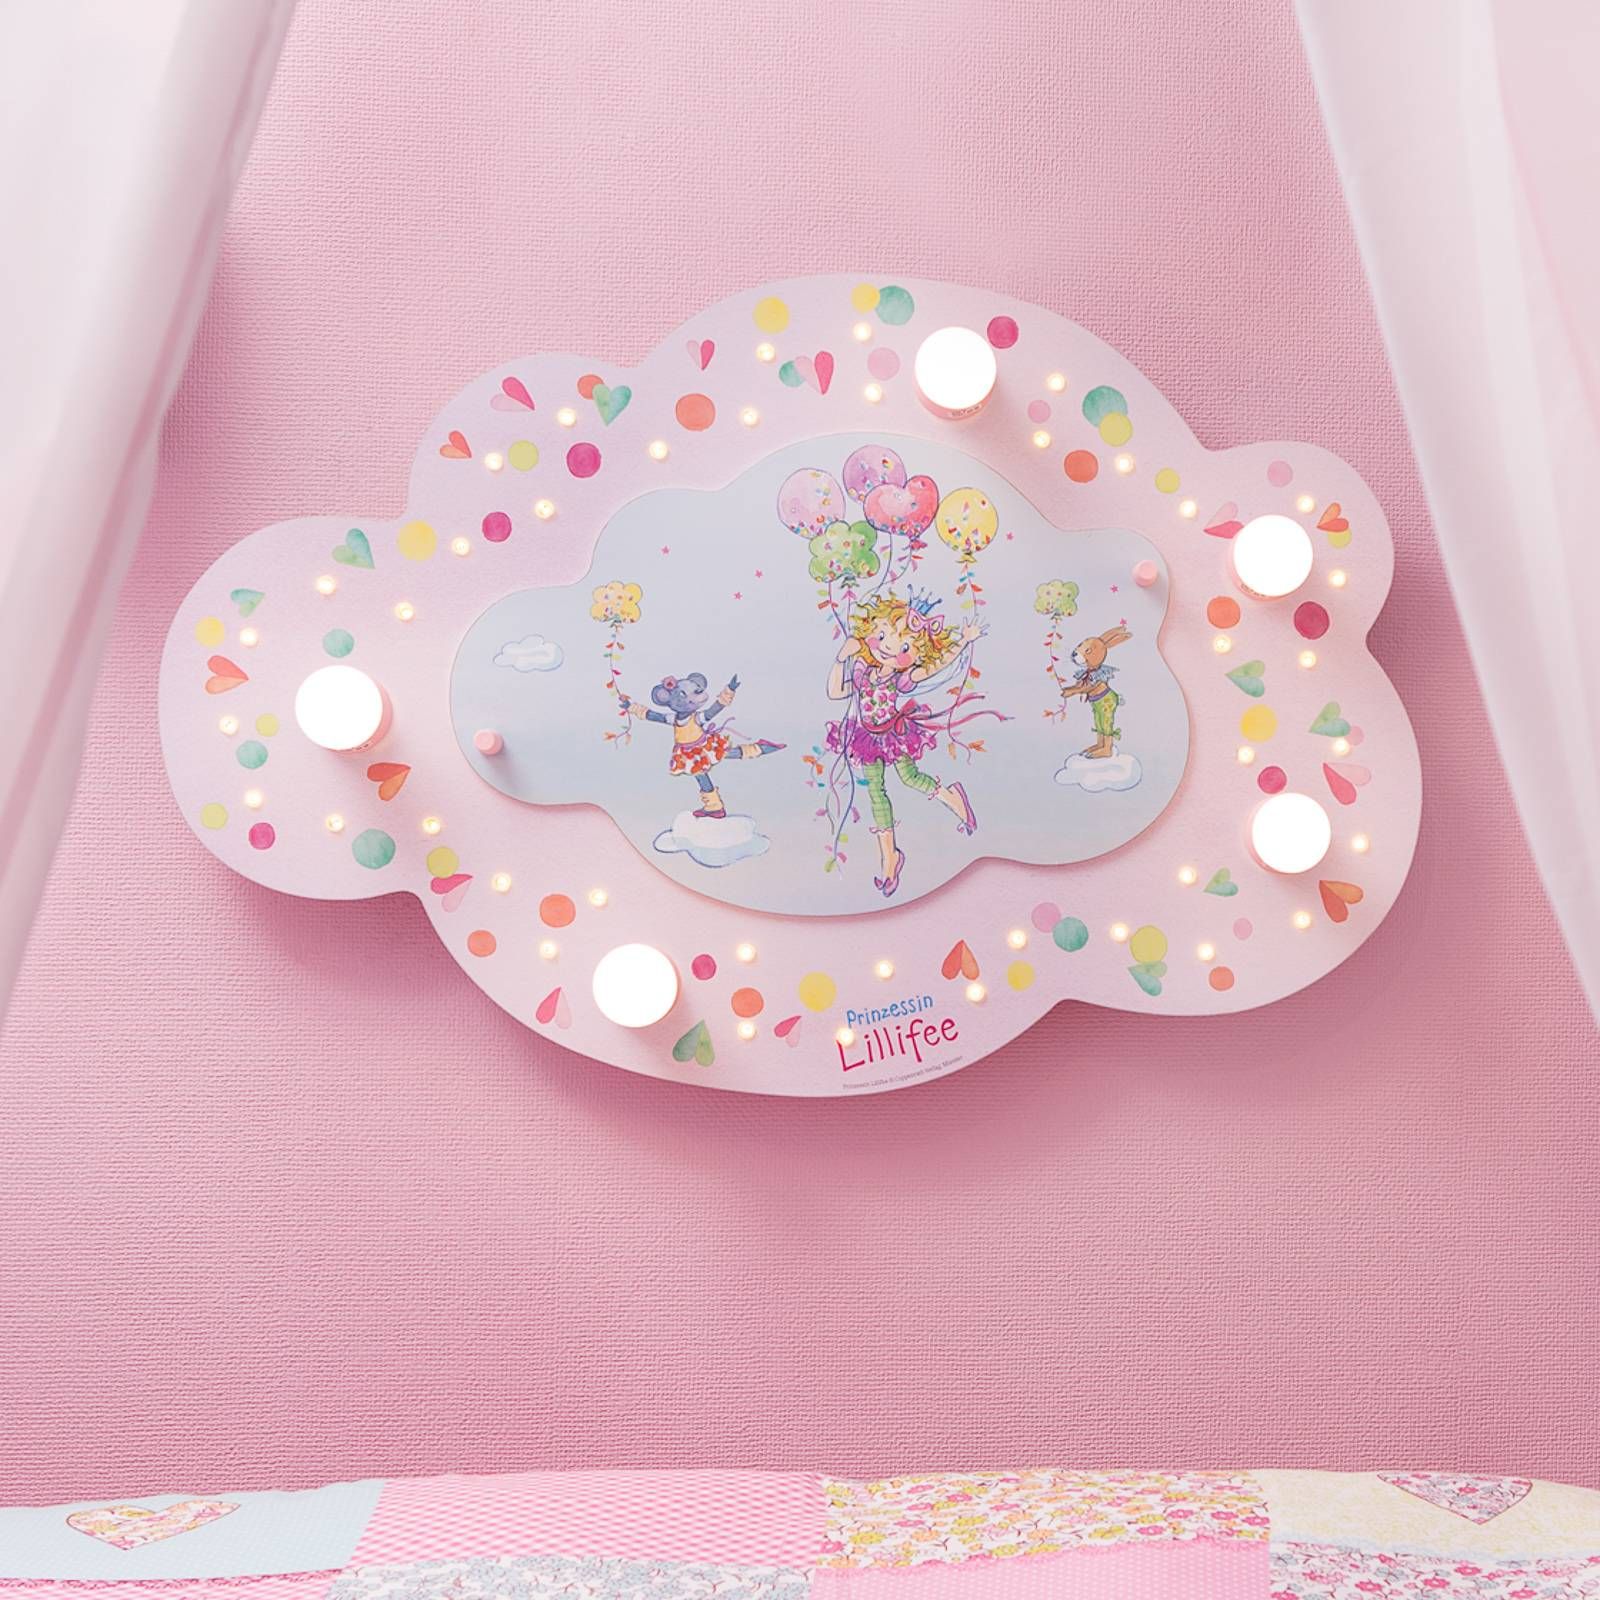 Elobra Stropné svietidlo Princezná Lillifee oblak LED, Detská izba, drevo, E14, 40W, P: 75 cm, L: 50 cm, K: 8cm